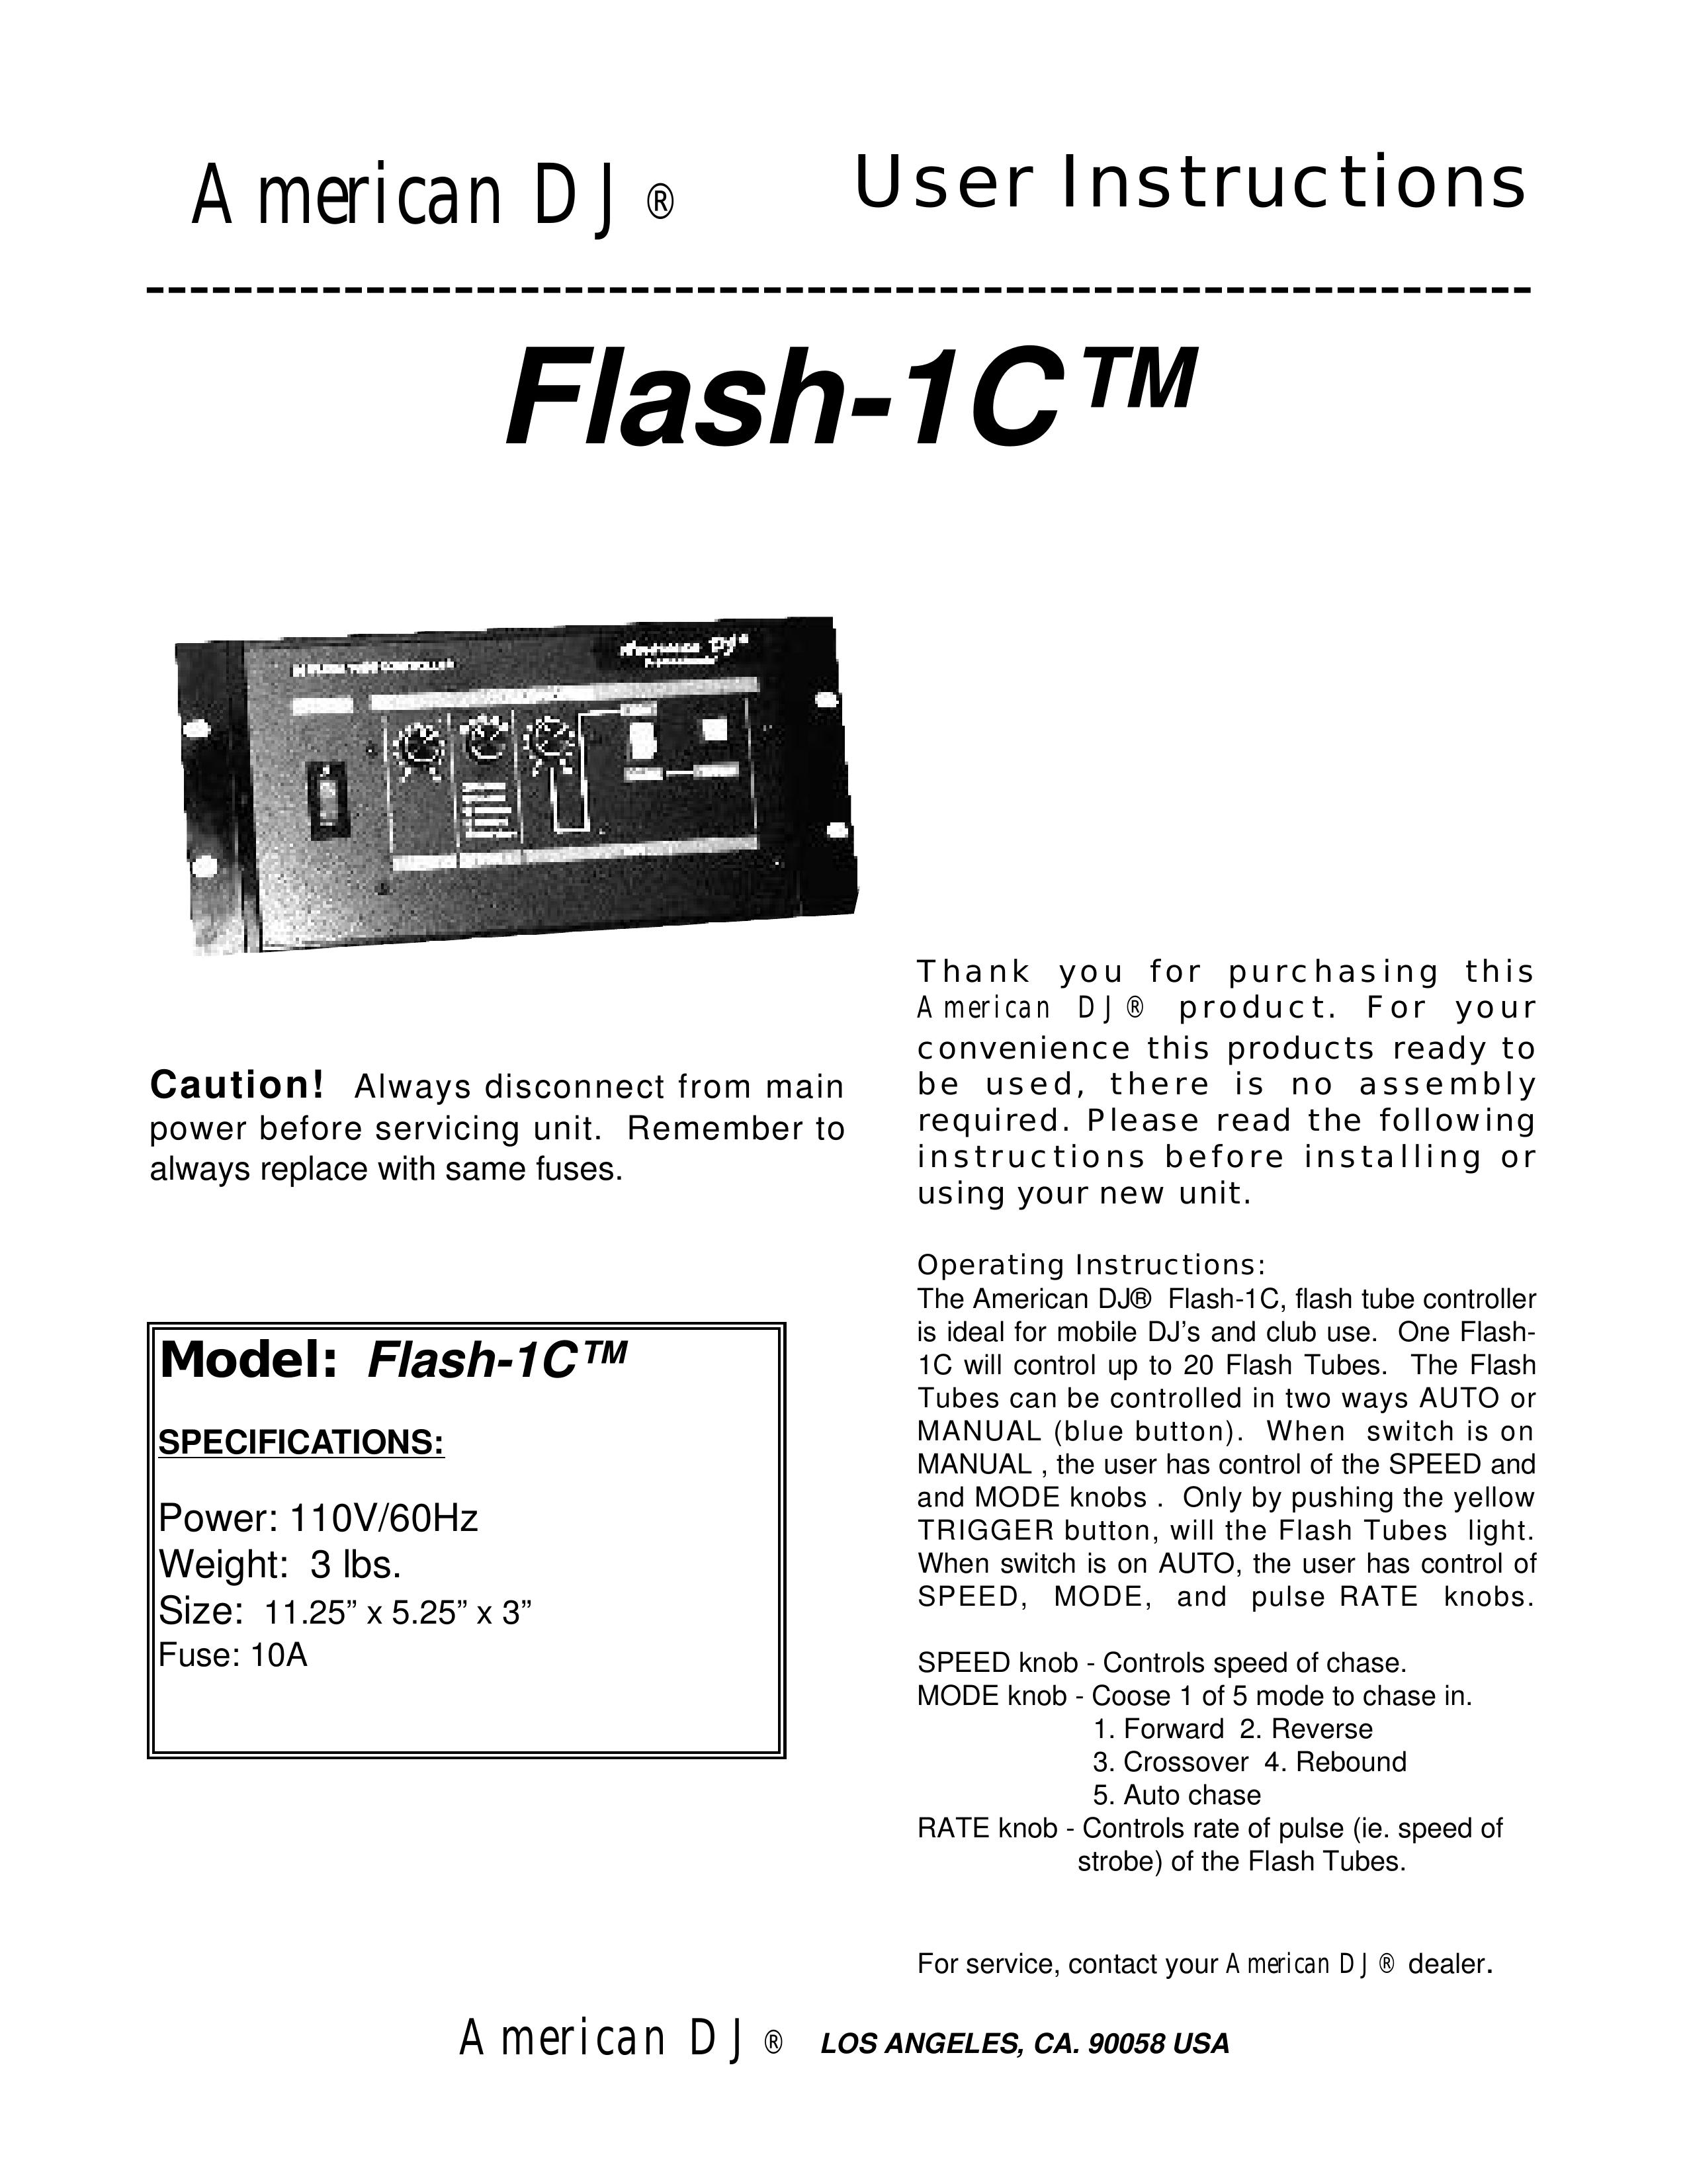 American DJ Flash-1CTM DJ Equipment User Manual